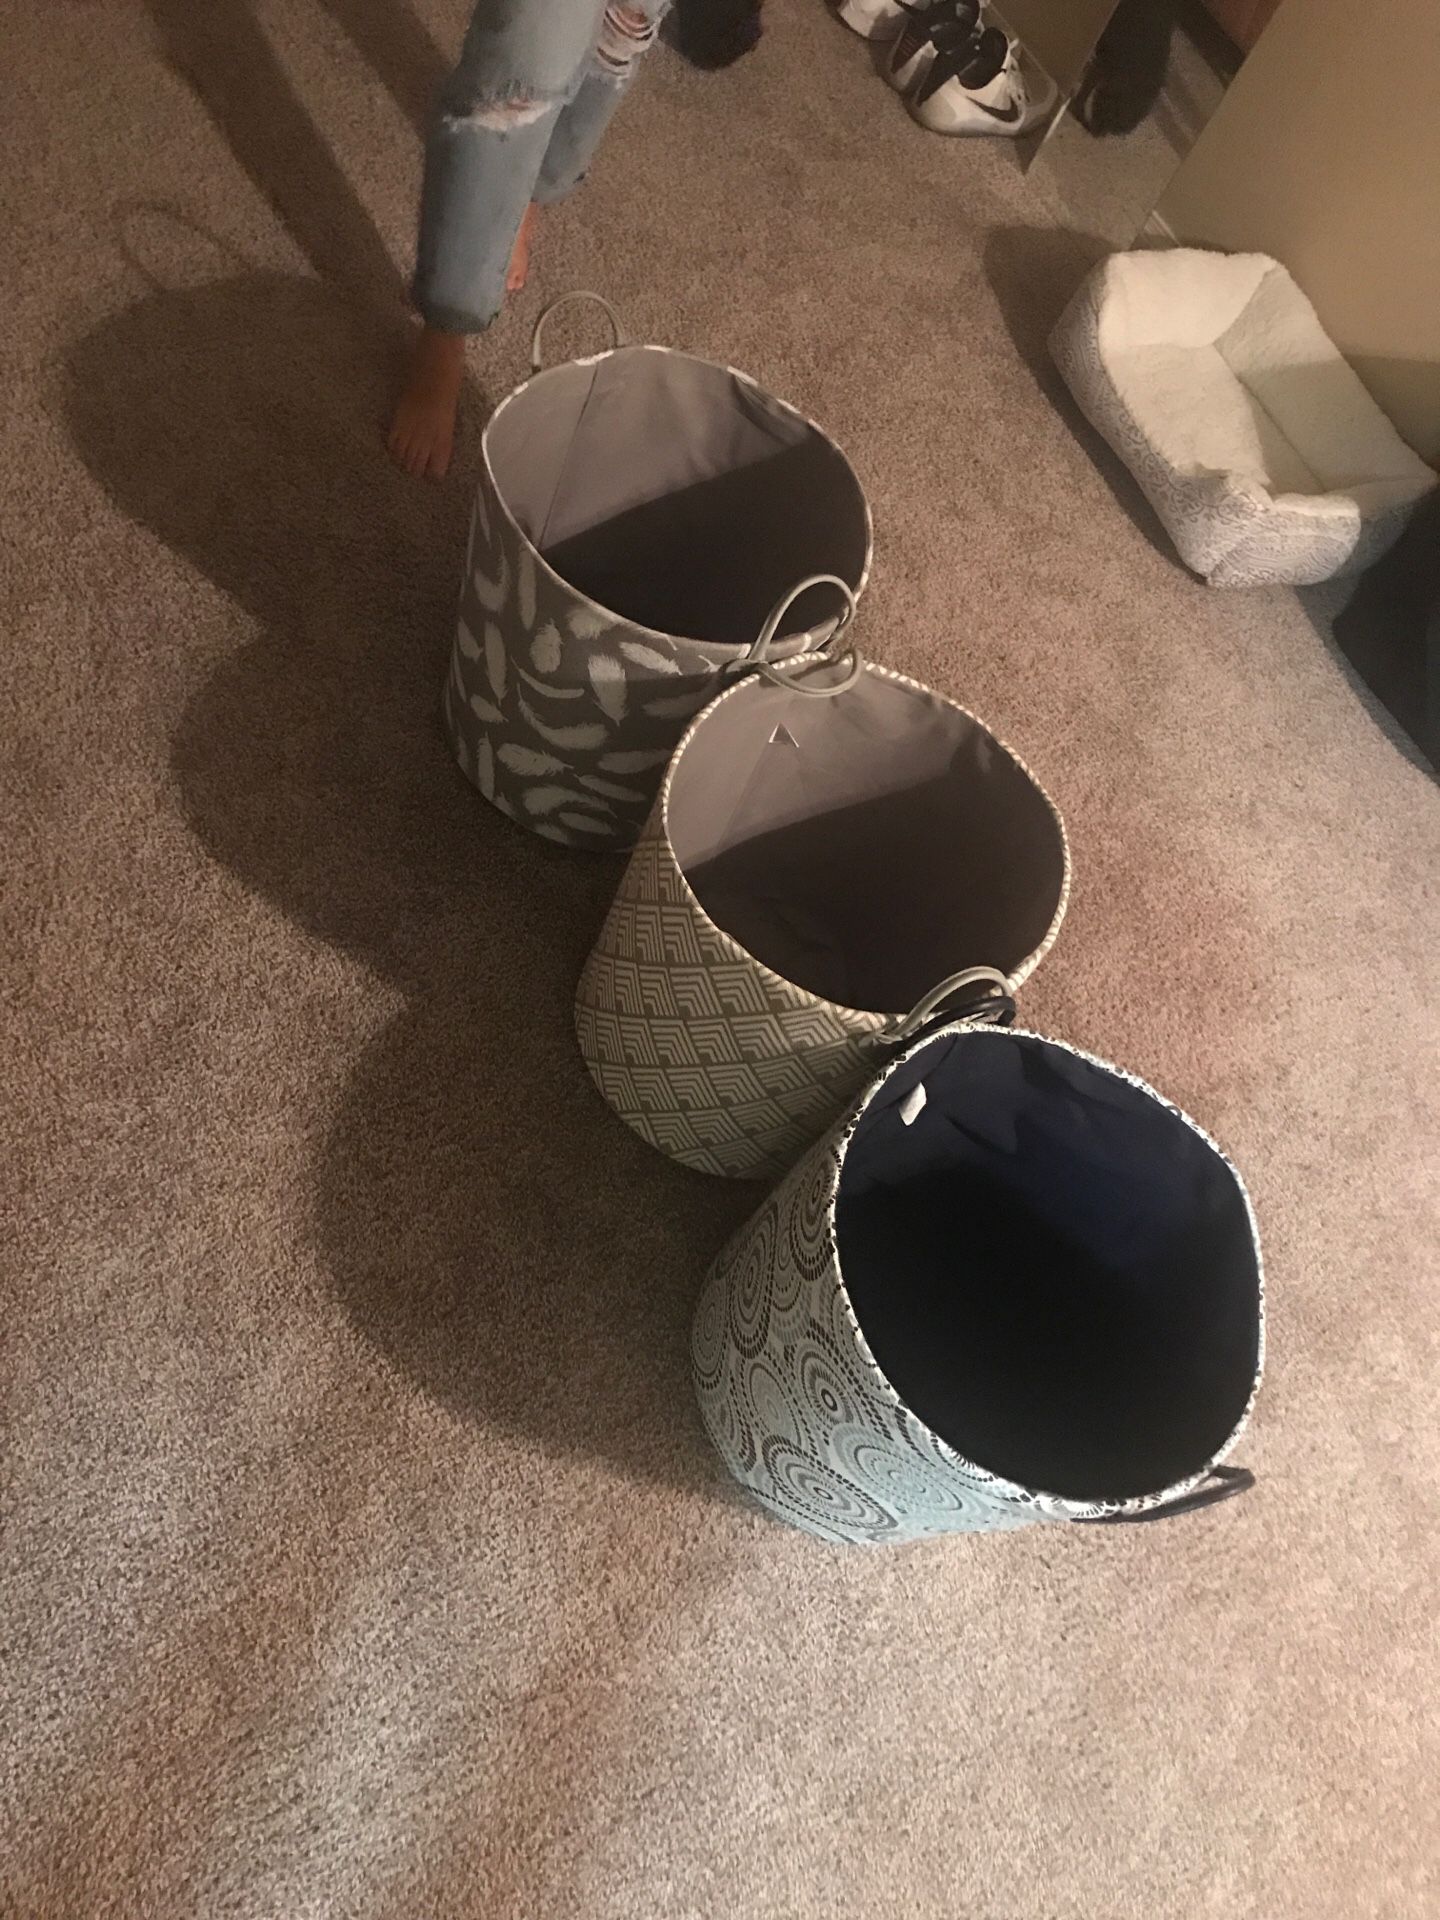 3 decorative laundry baskets